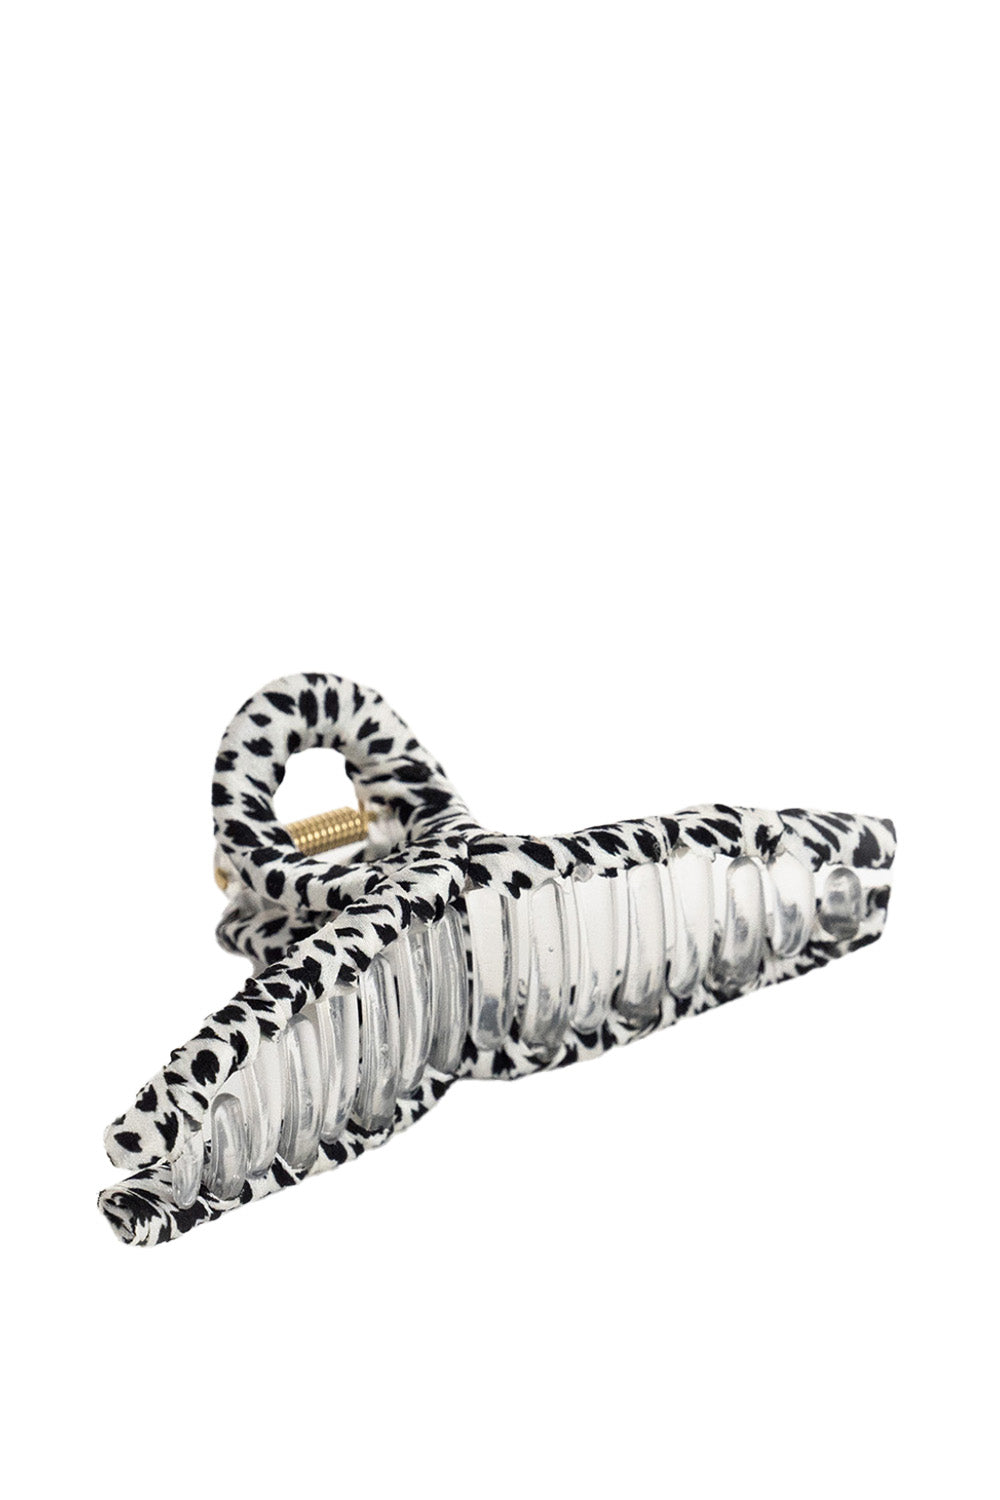 Twist Hair Claw in Black and White Zebra Print | My Accessories London Hair Claw | Womens hair clip